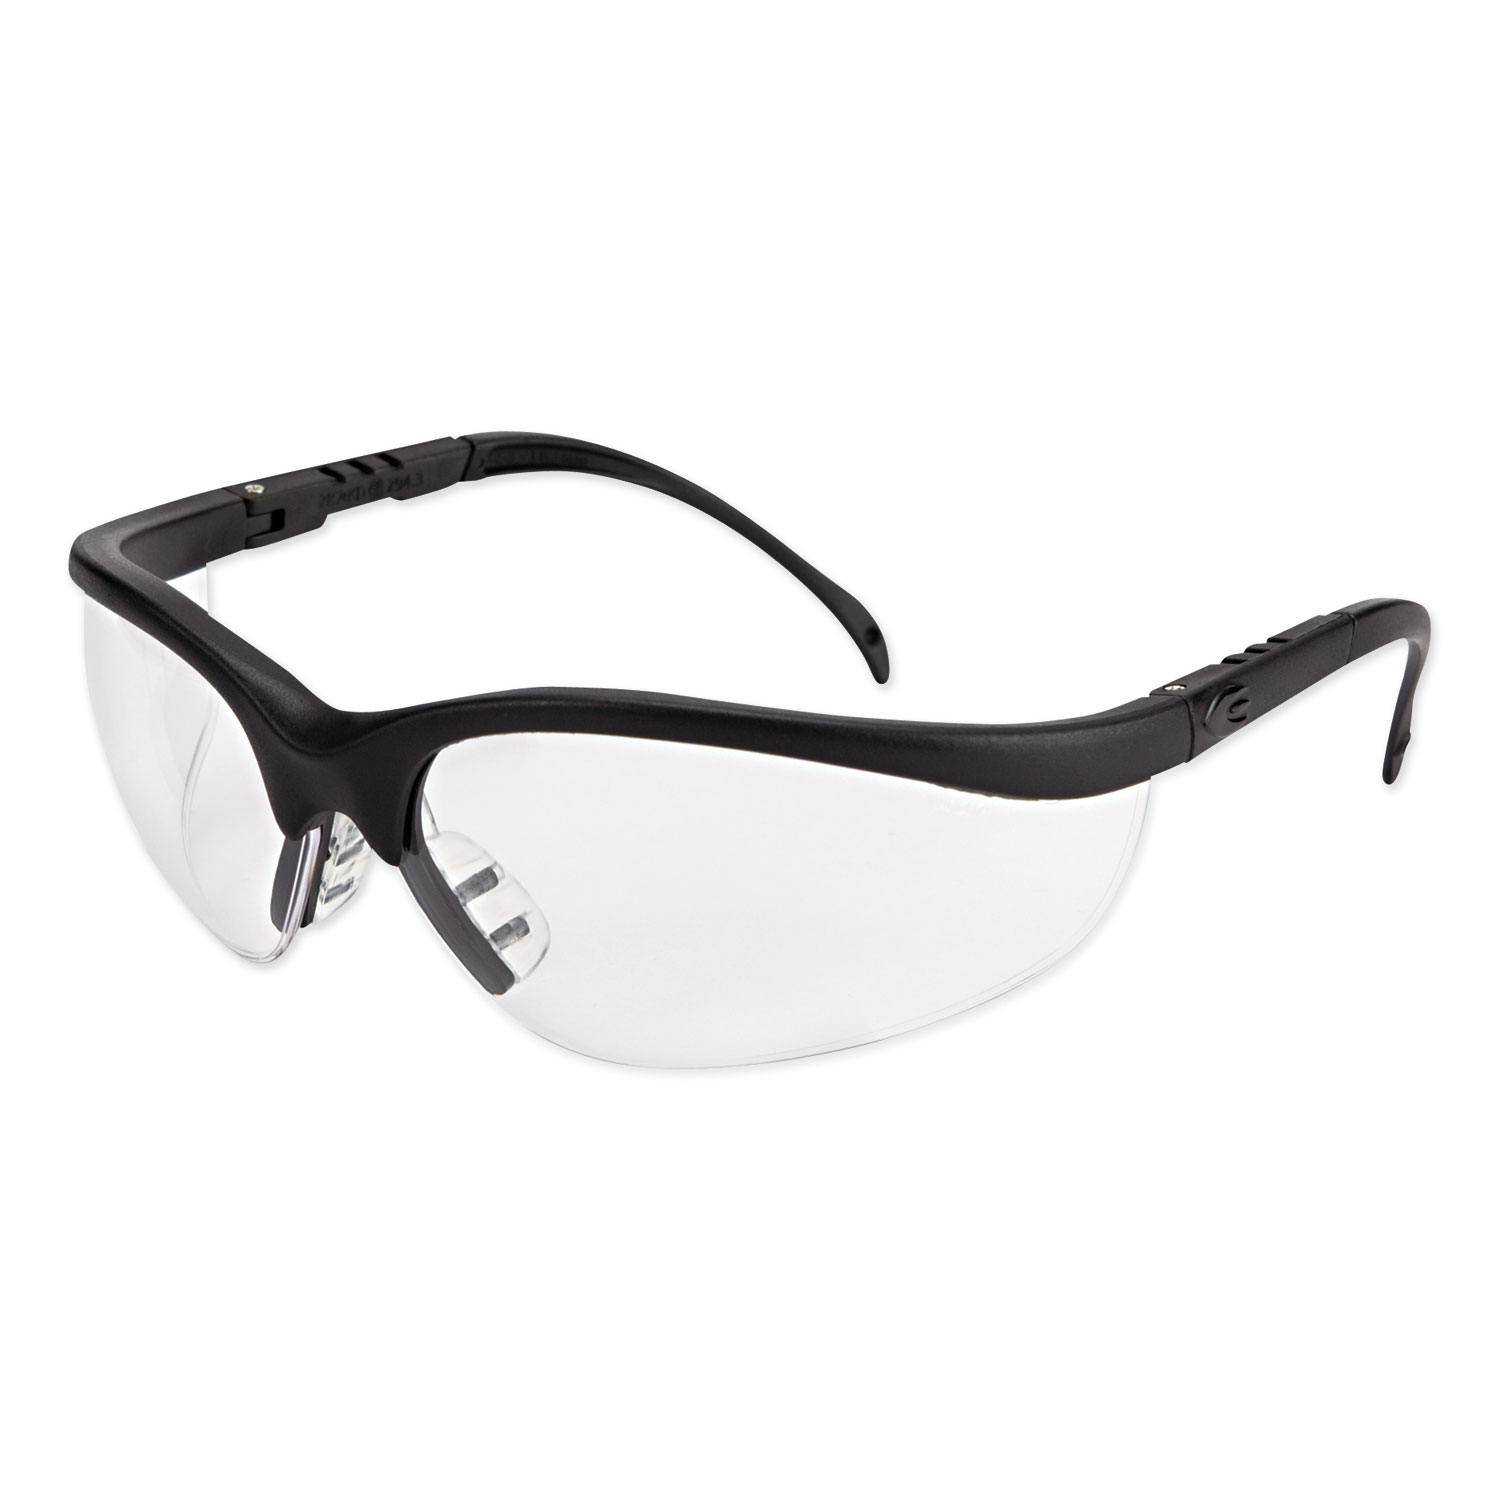  MCR Safety KD110 Klondike Safety Glasses, Matte Black Frame, Clear Lens (CRWKD110BX) 